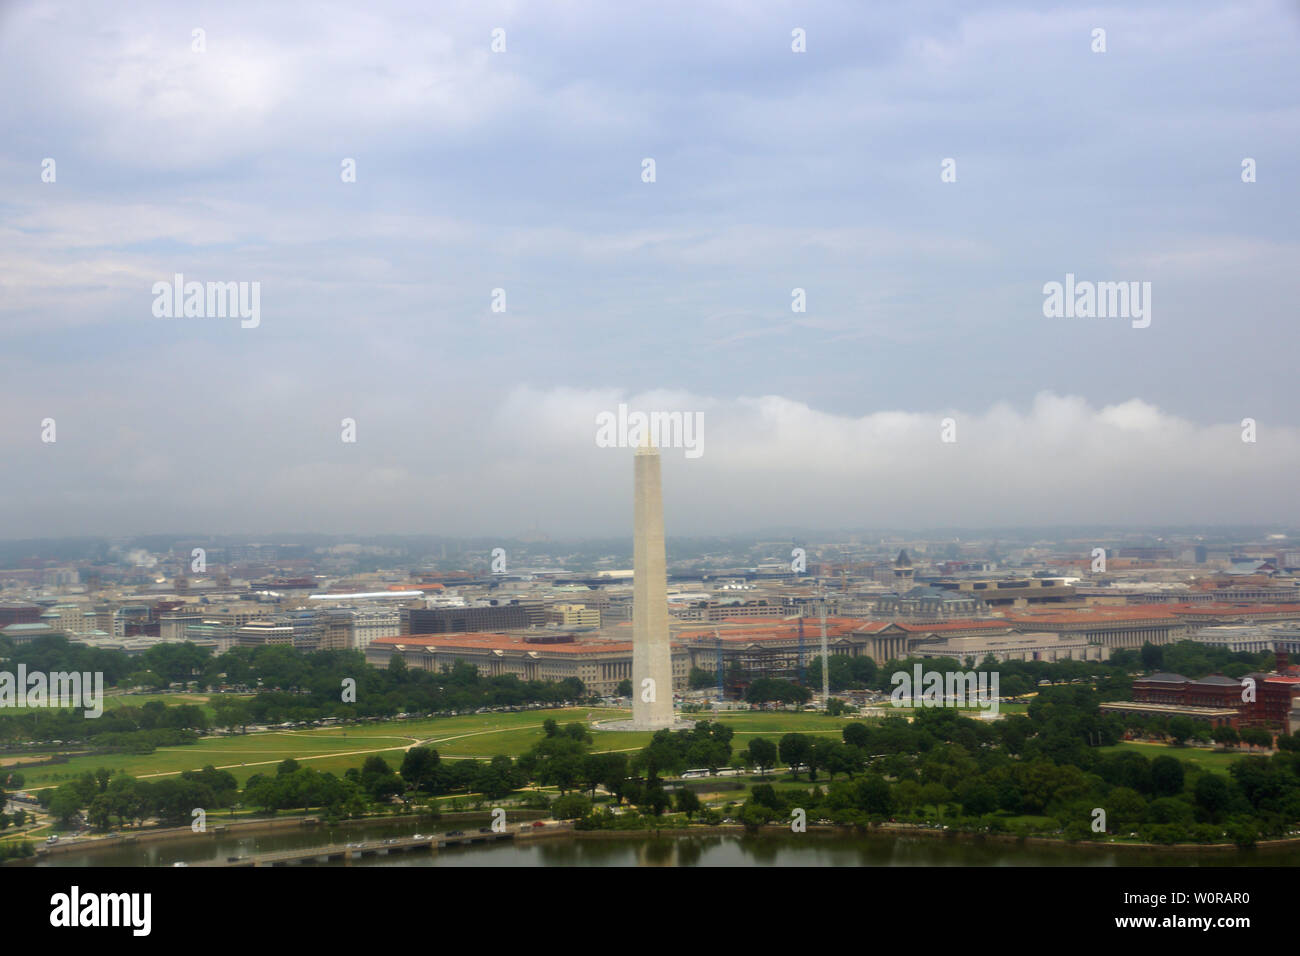 Aerial view of Washington Monument on the Washington mall, Washington DC on a cloudy day. Stock Photo